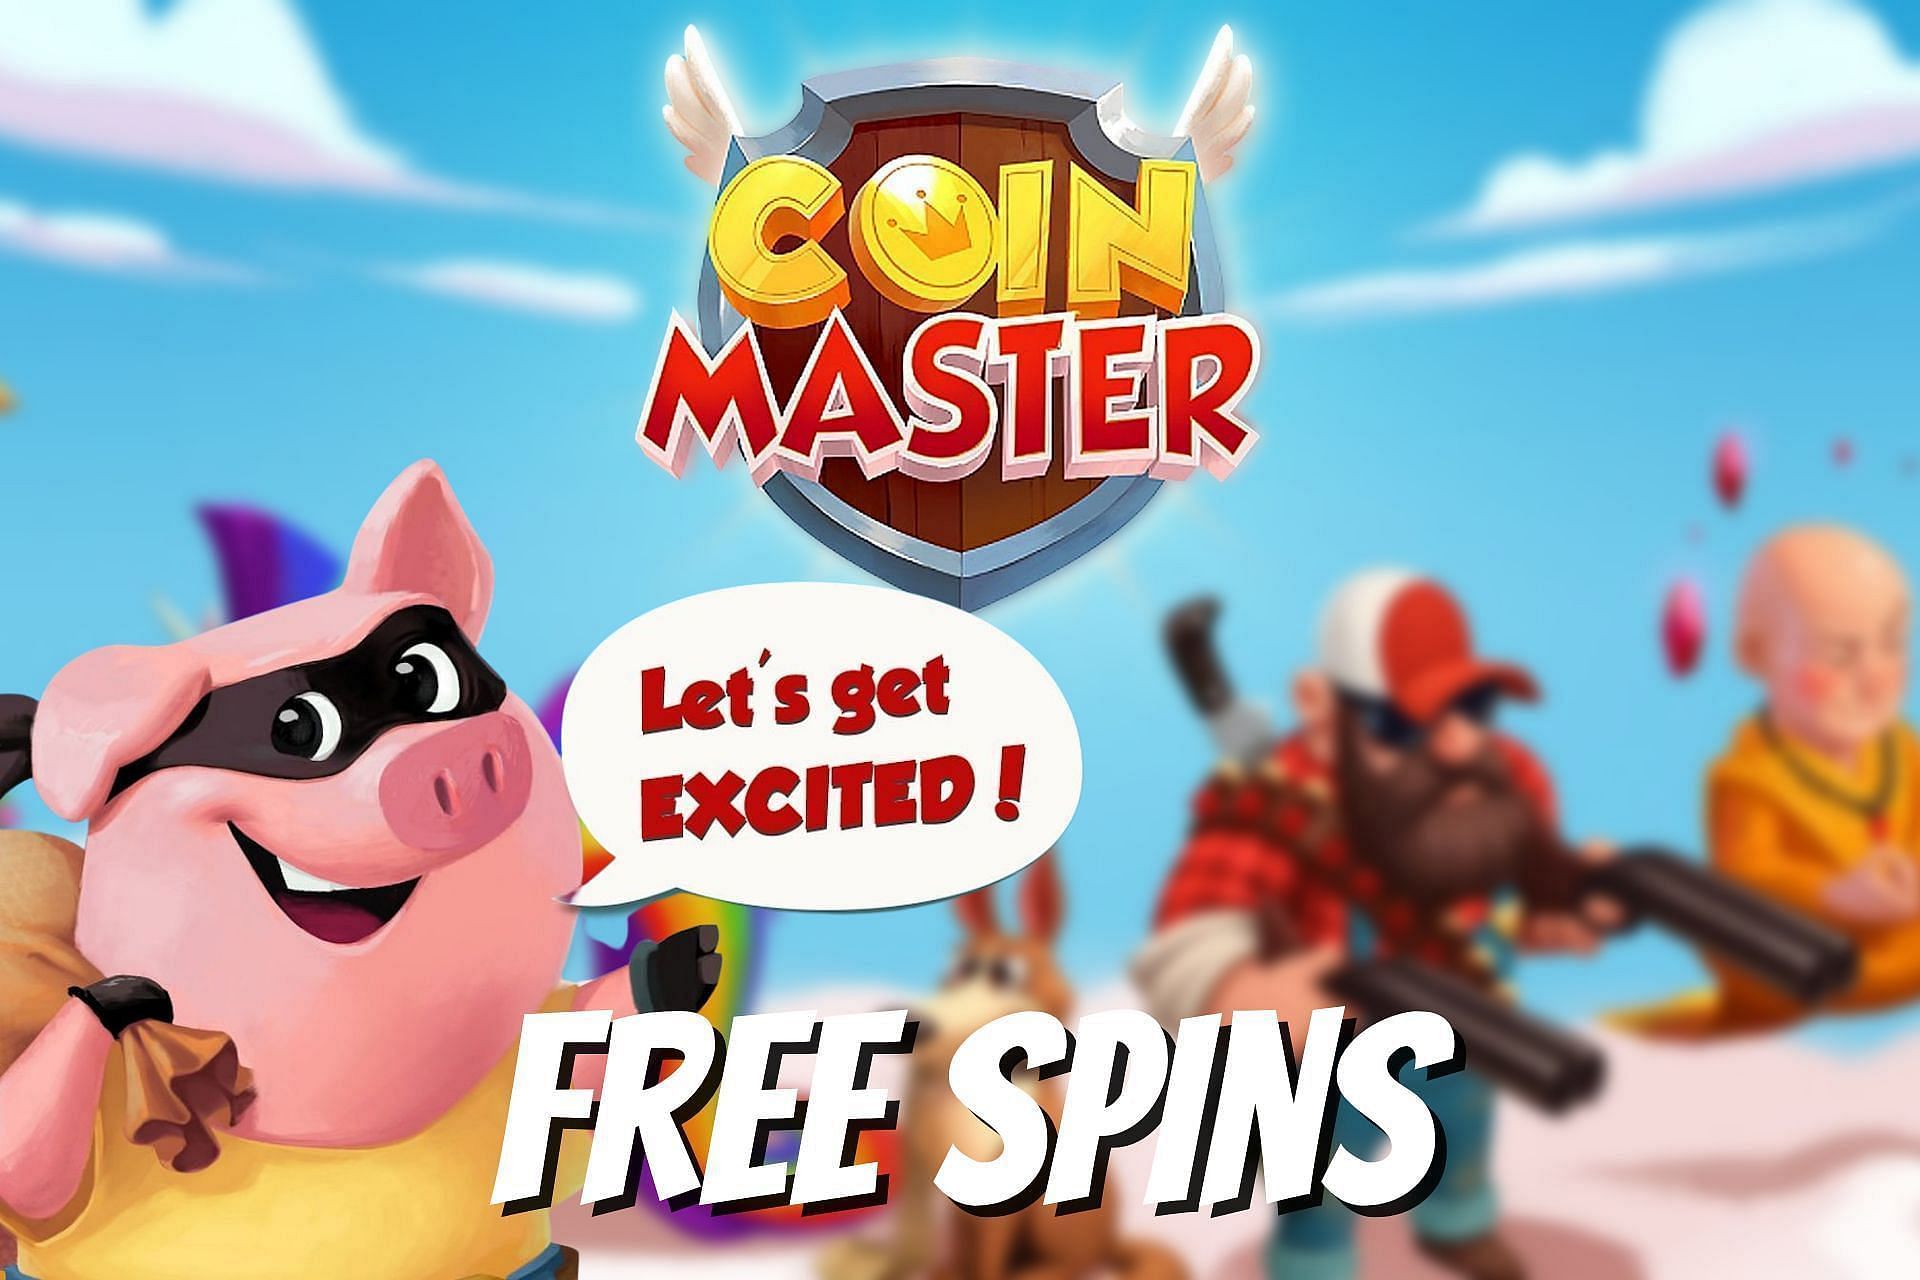 Free spins in Coin Master (Image via Sportskeeda)